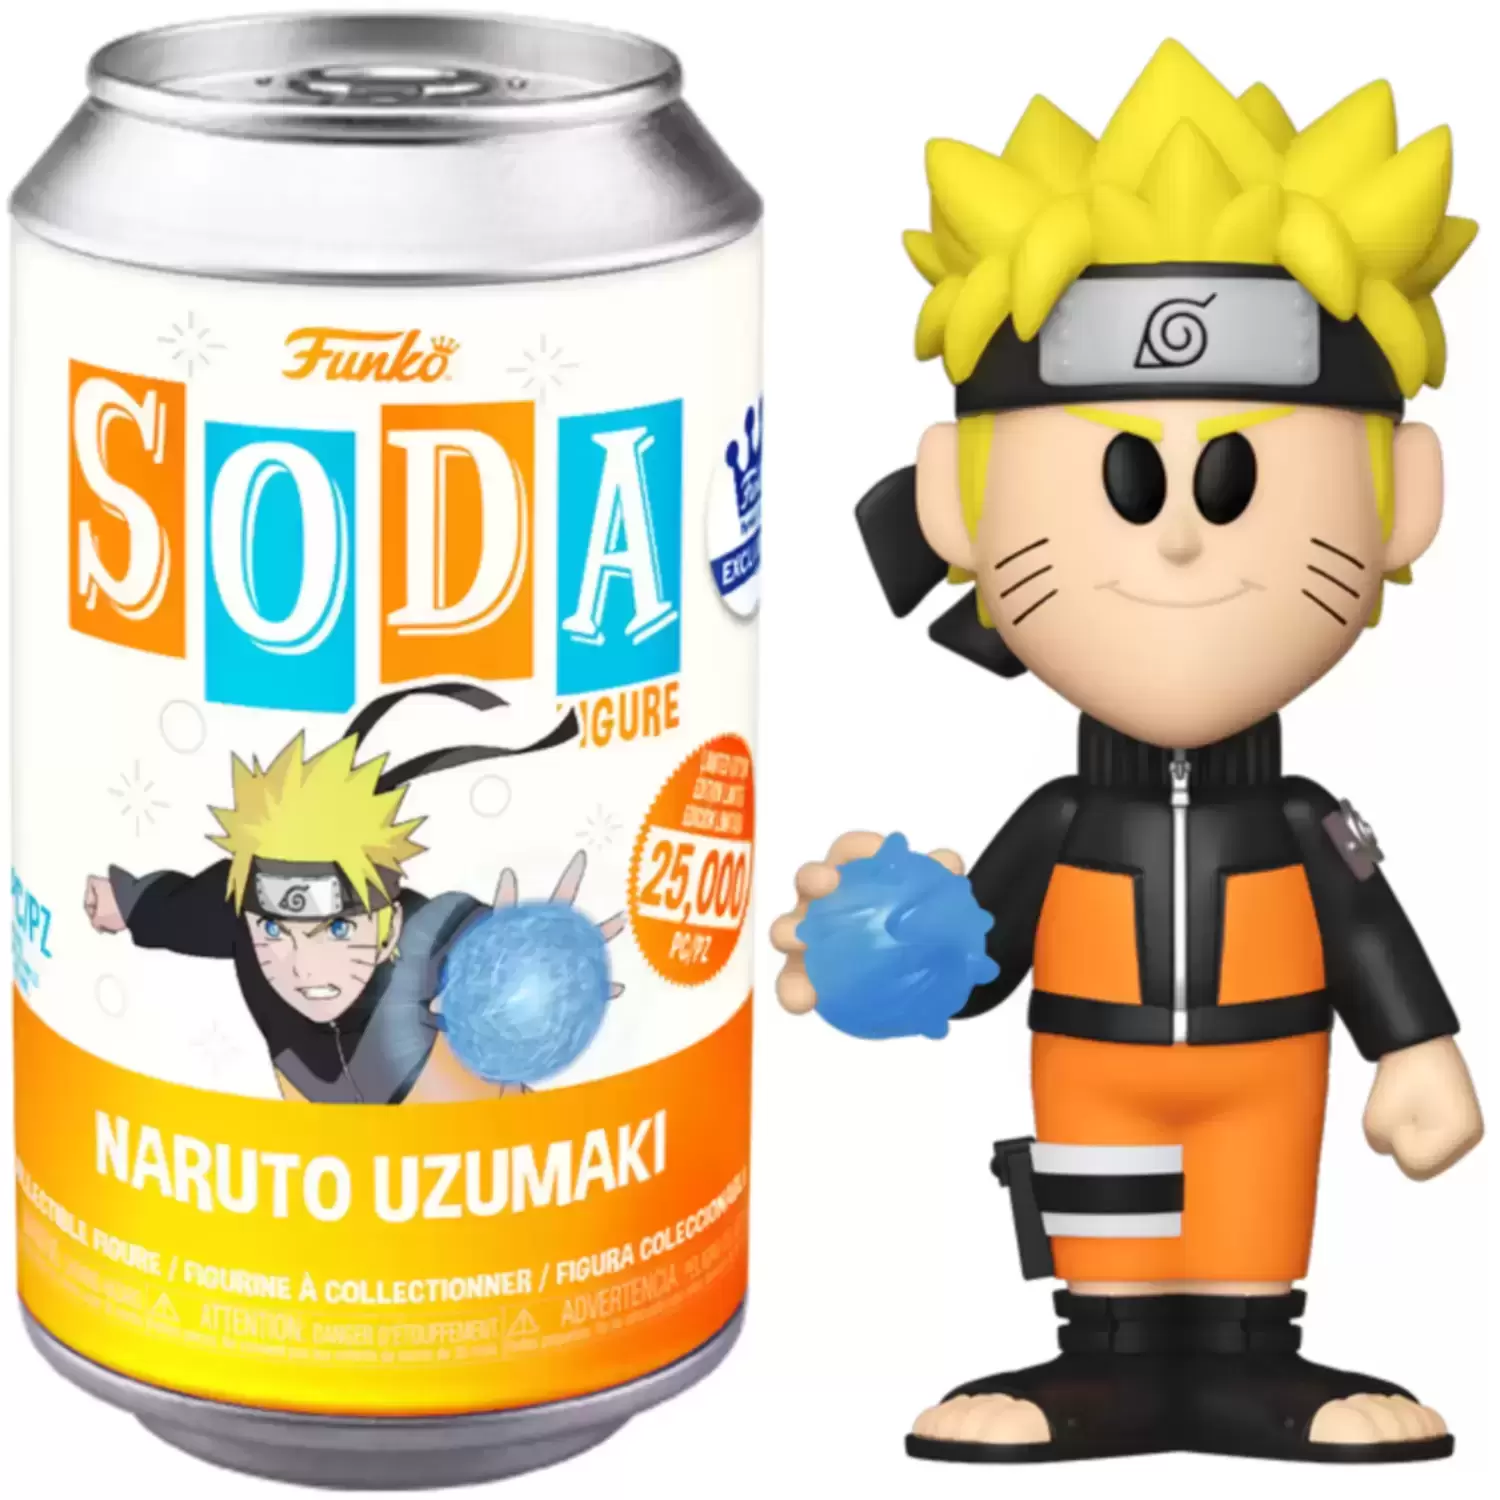 Vinyl Soda! - Naruto - Naruto Uzumaki